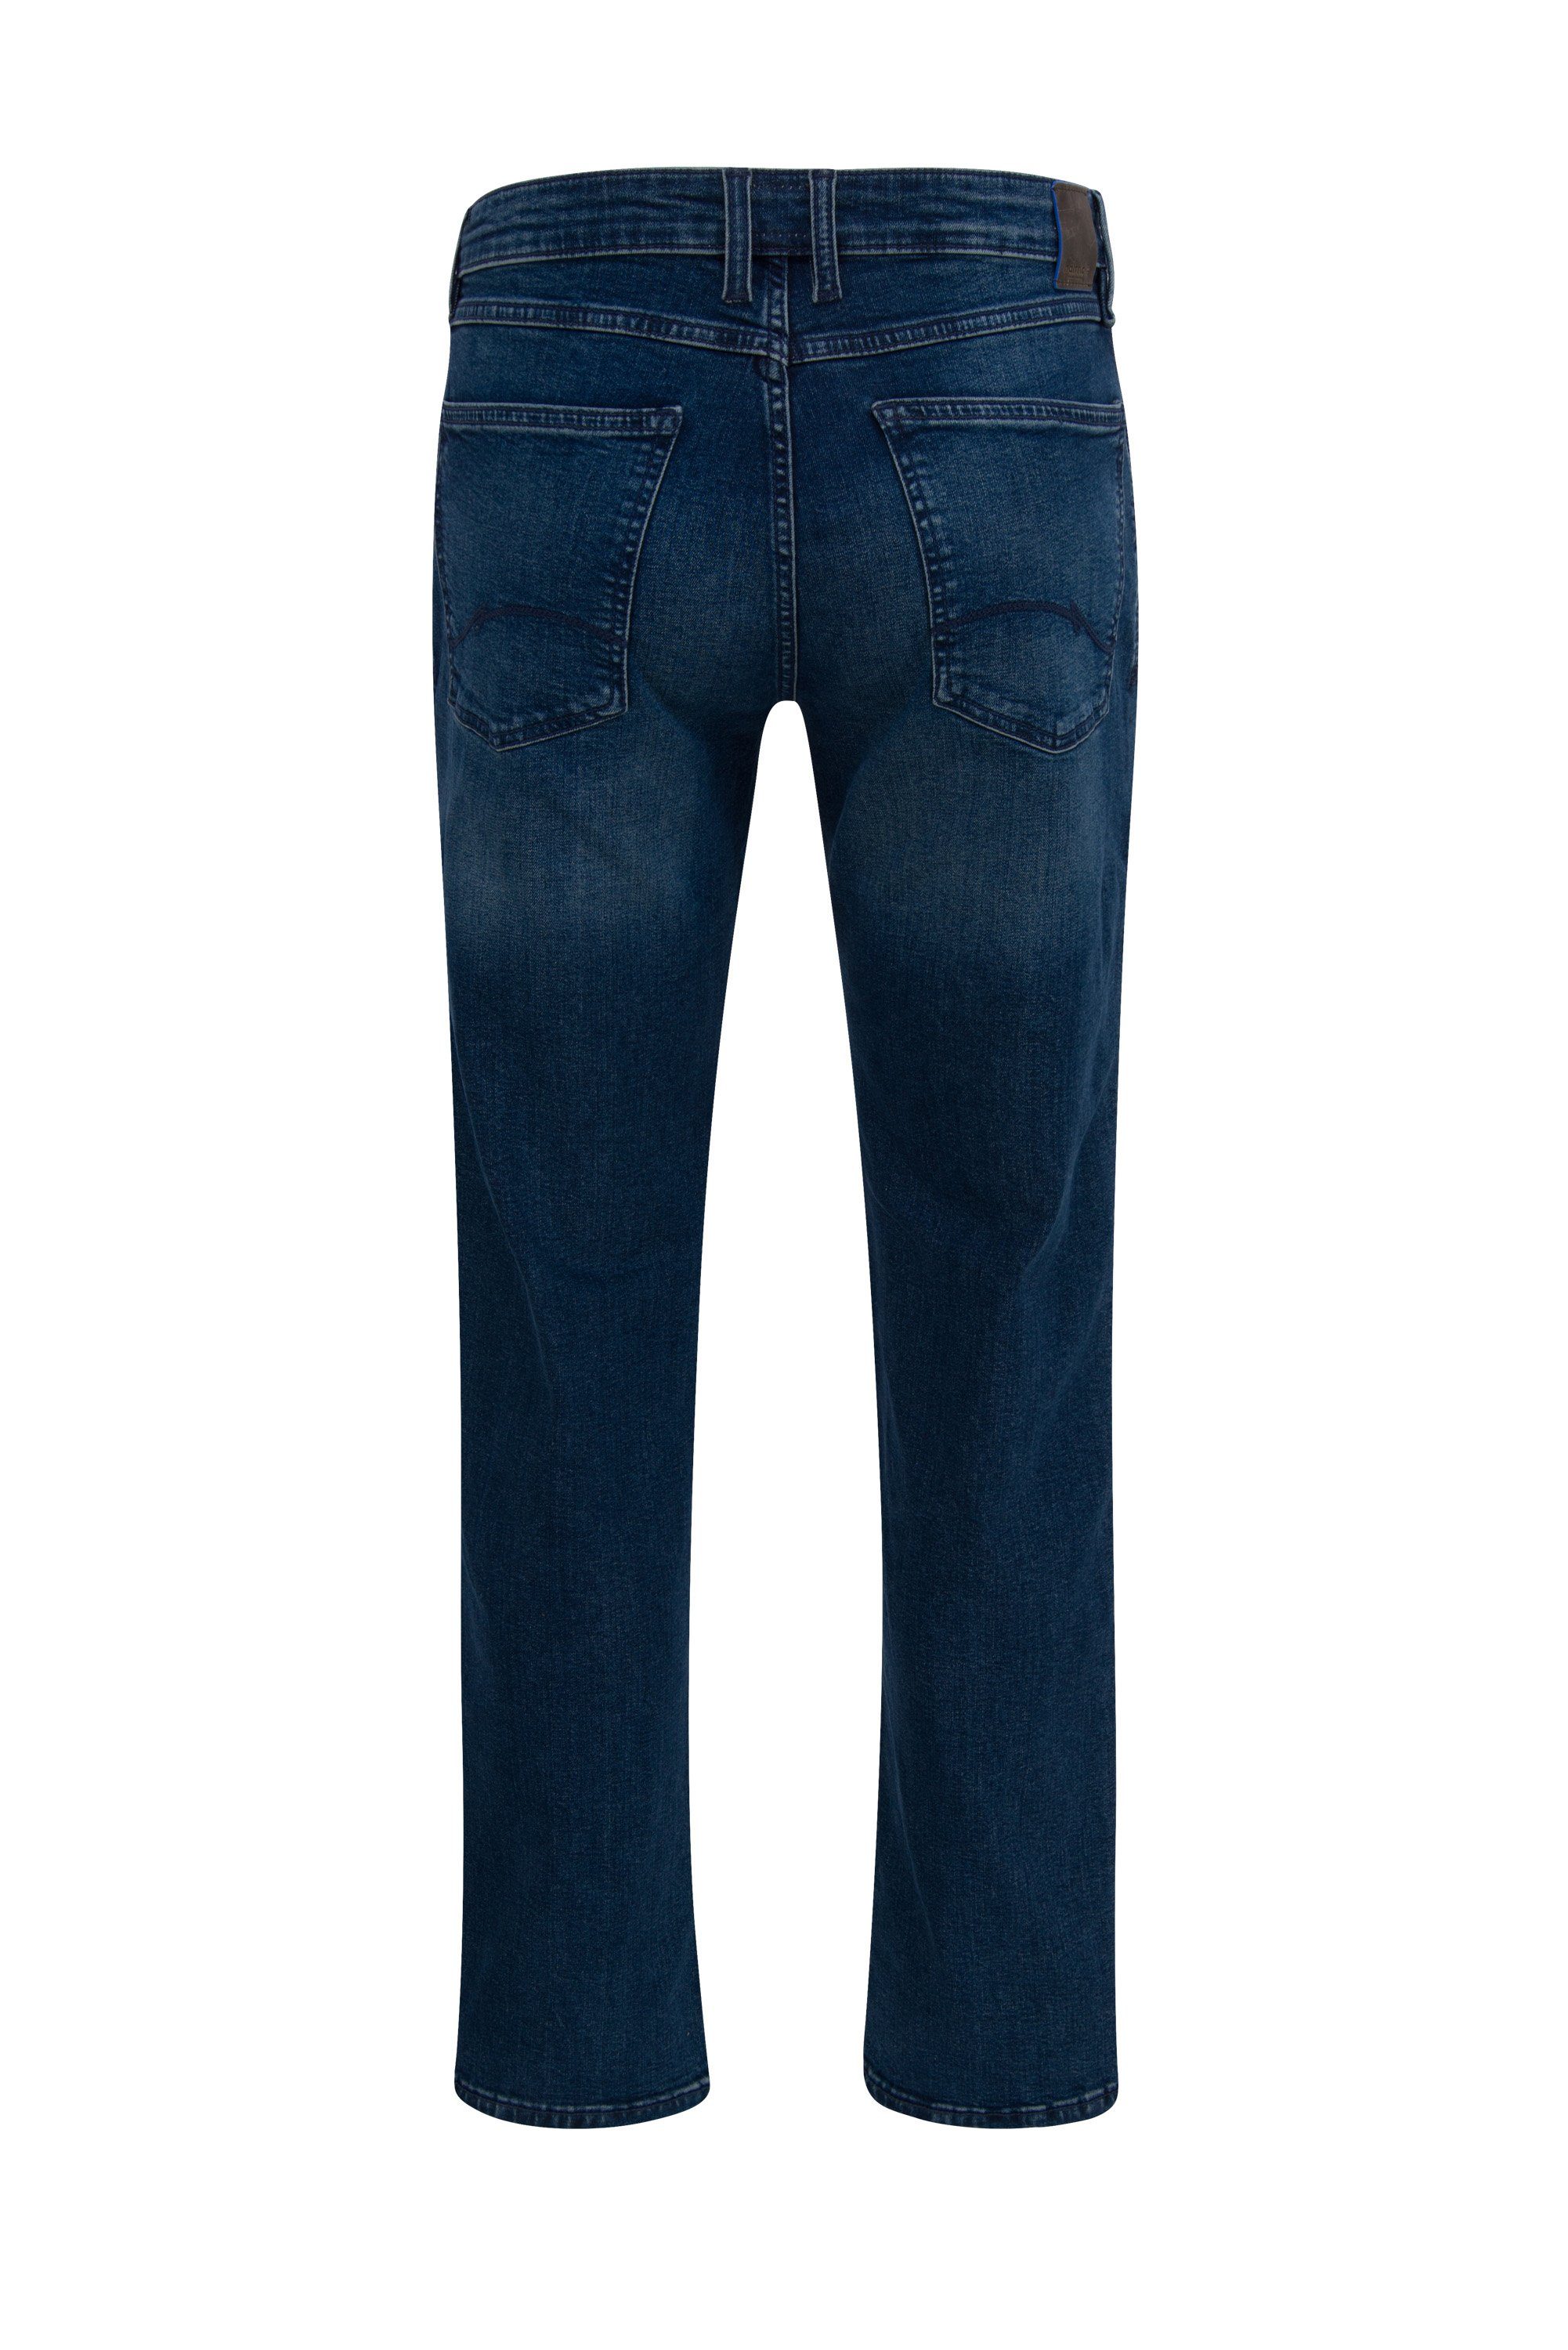 Hattric HUNTER HIGH-STRETCH HATTRIC blue stone dark - 688465 6350.48 5-Pocket-Jeans